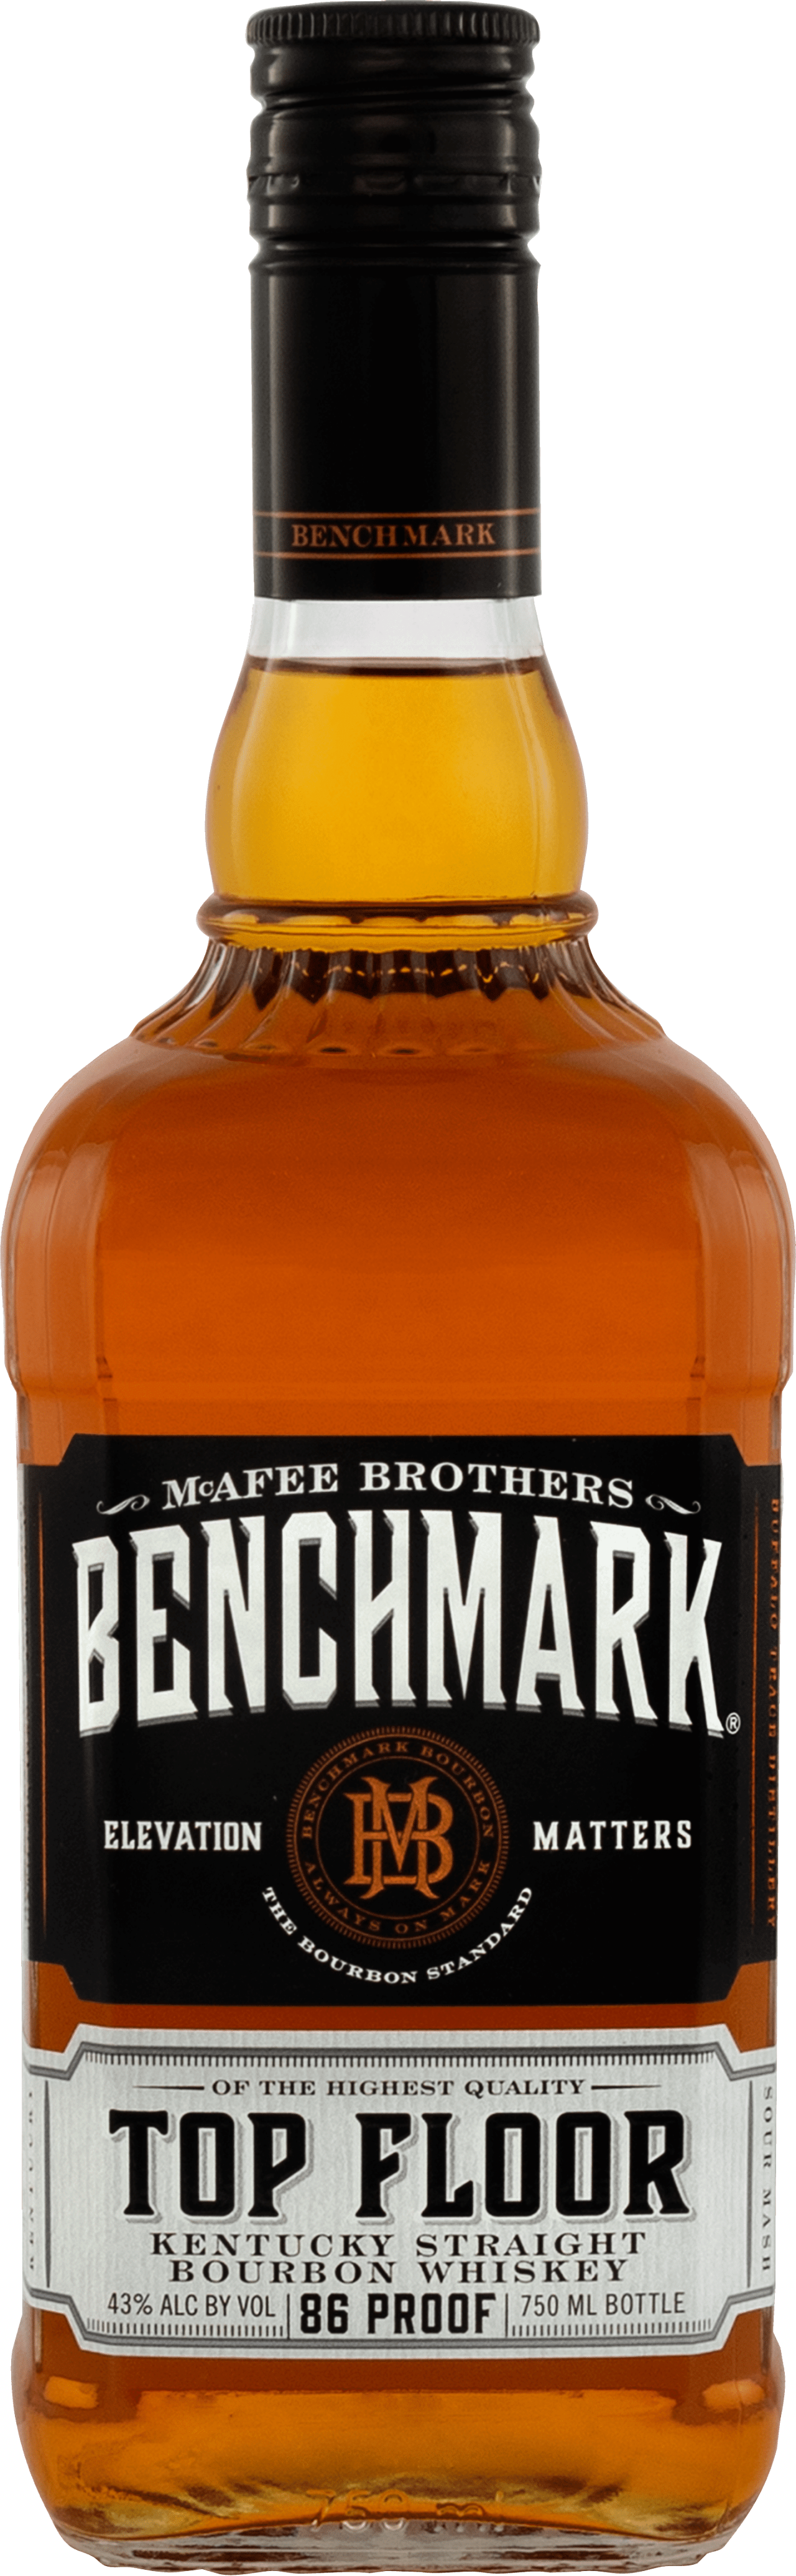 Benchmark Top Floor Kentucky Straight Bourbon Whiskey bottle